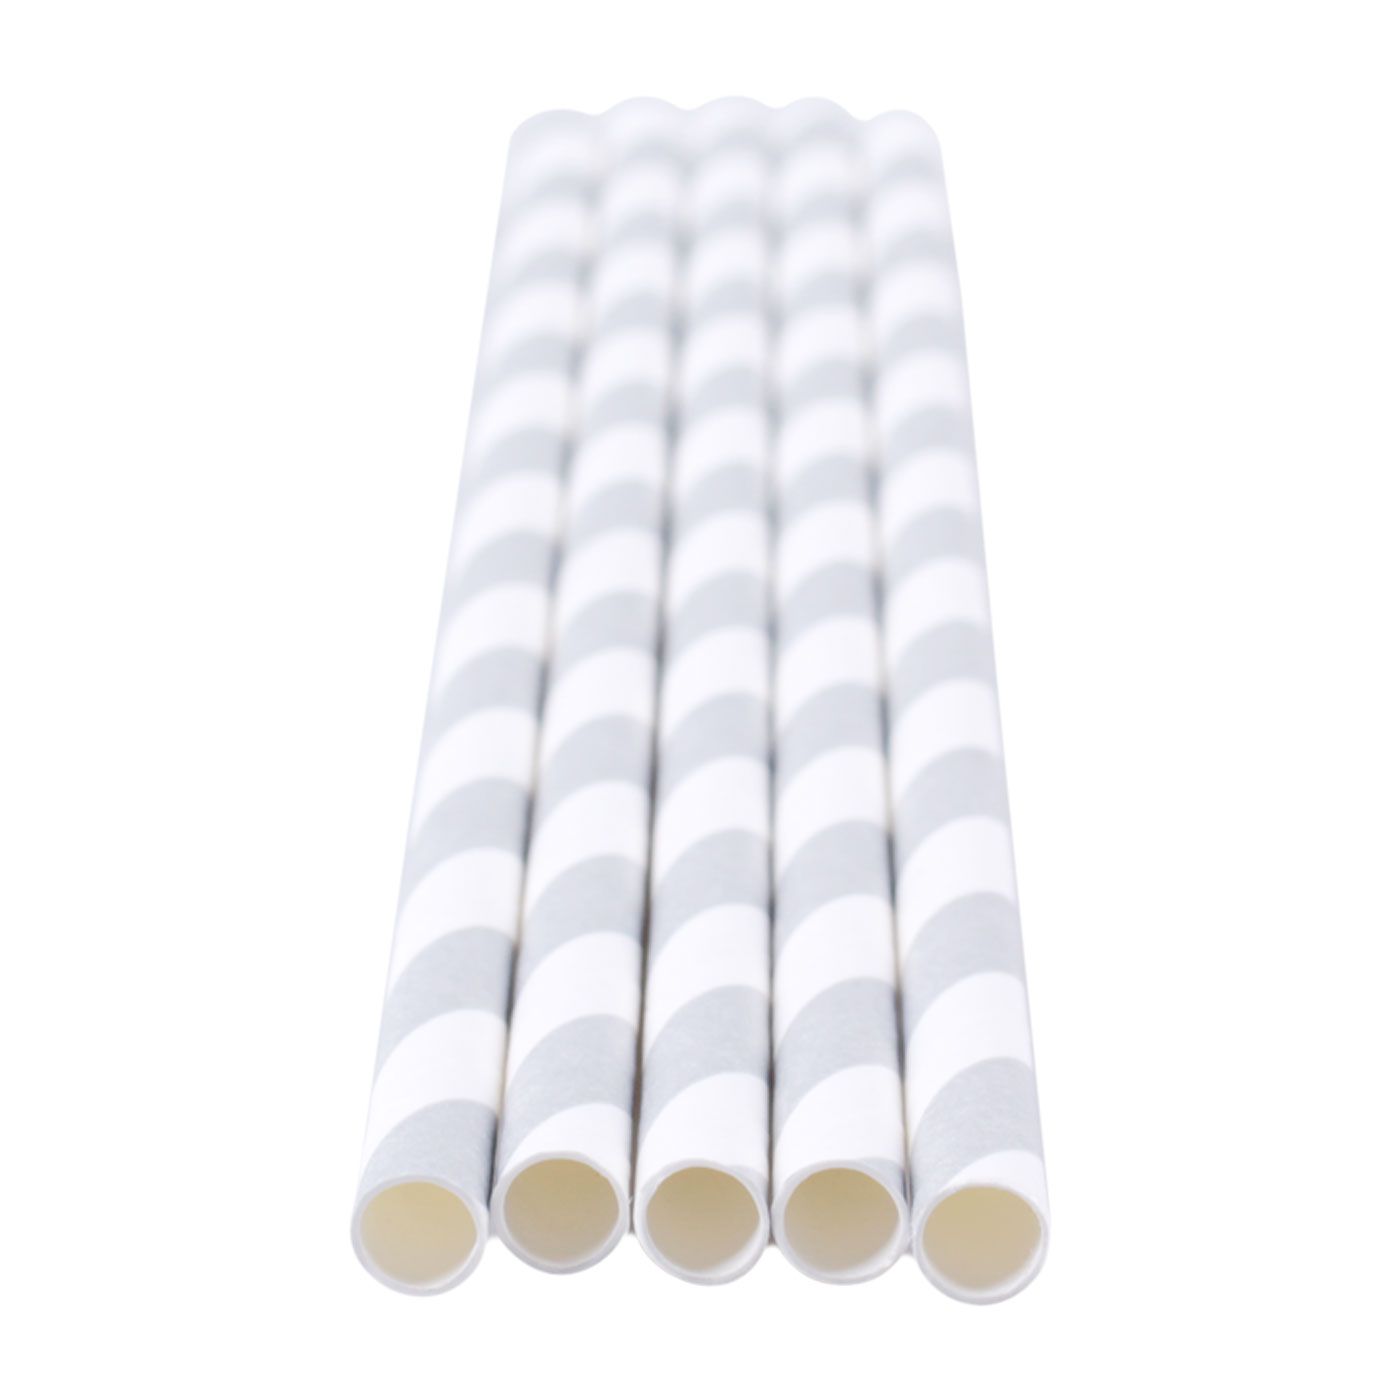 Gudily Striped Straw Silver & White - 5